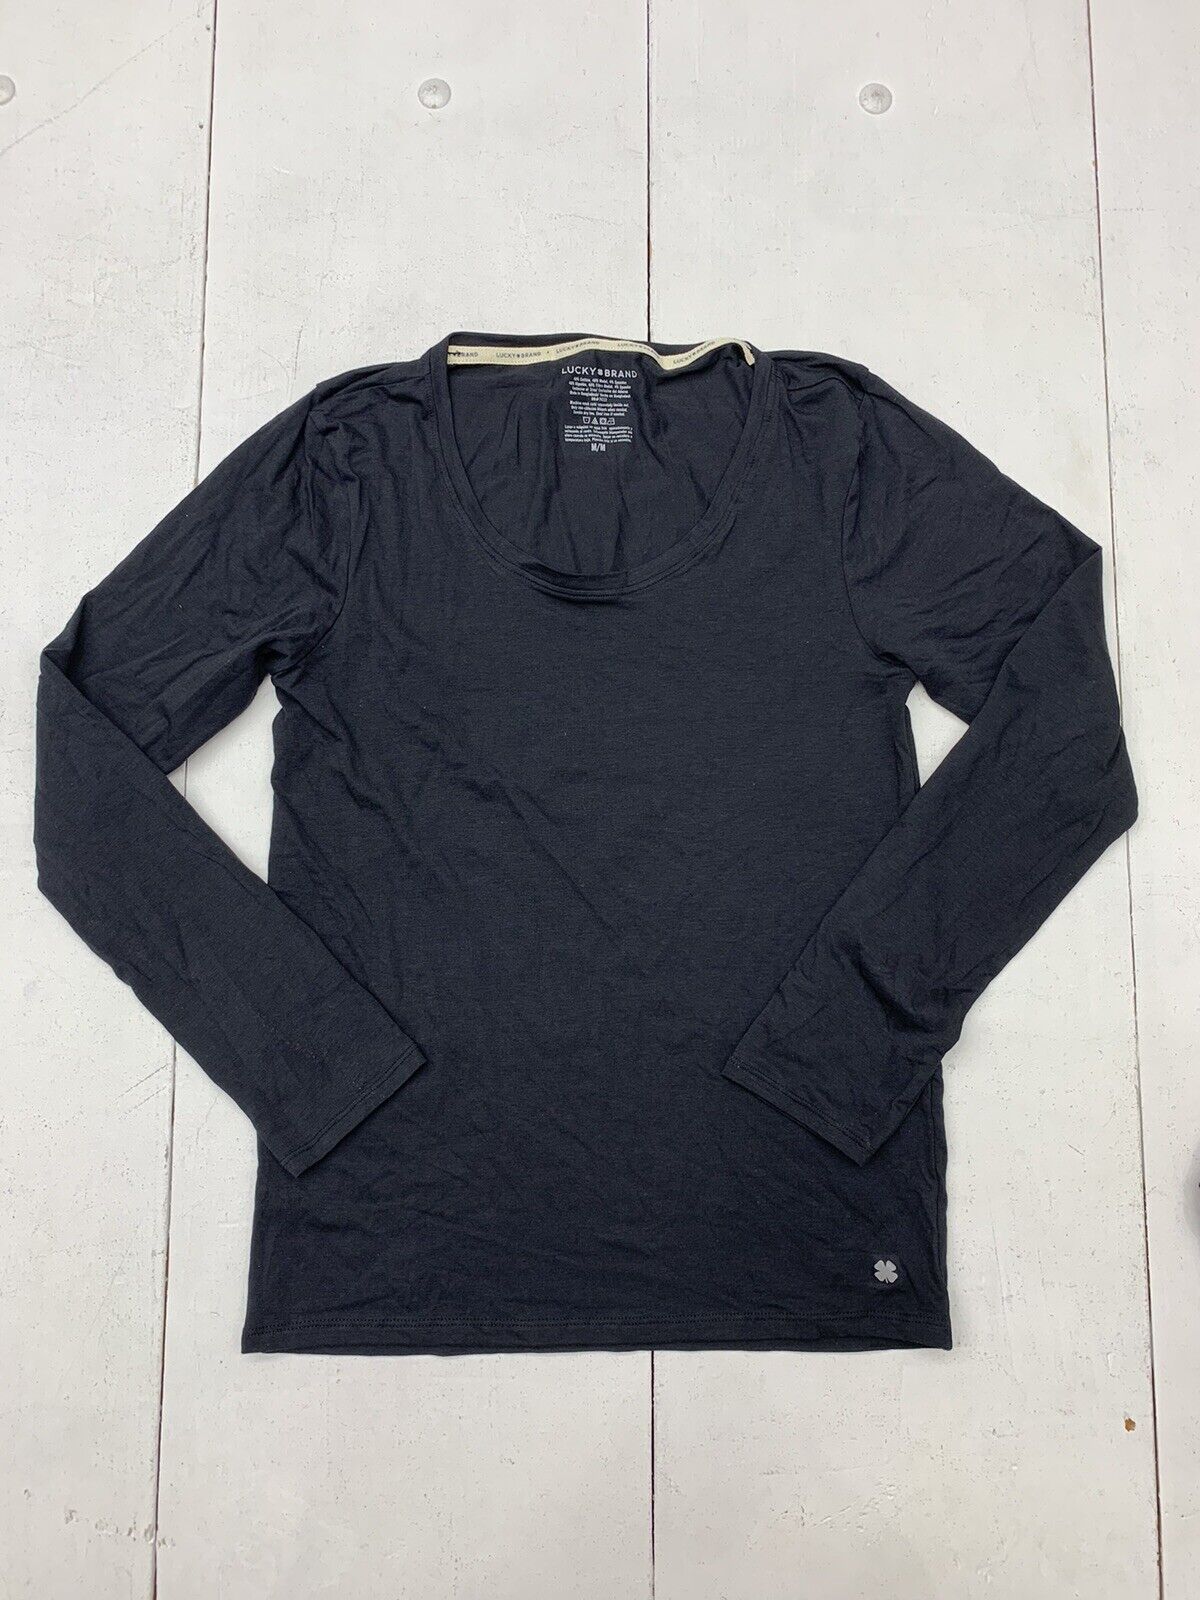 Lucky Brand Womens Black Long Sleeve Shirt Size Medium - beyond exchange